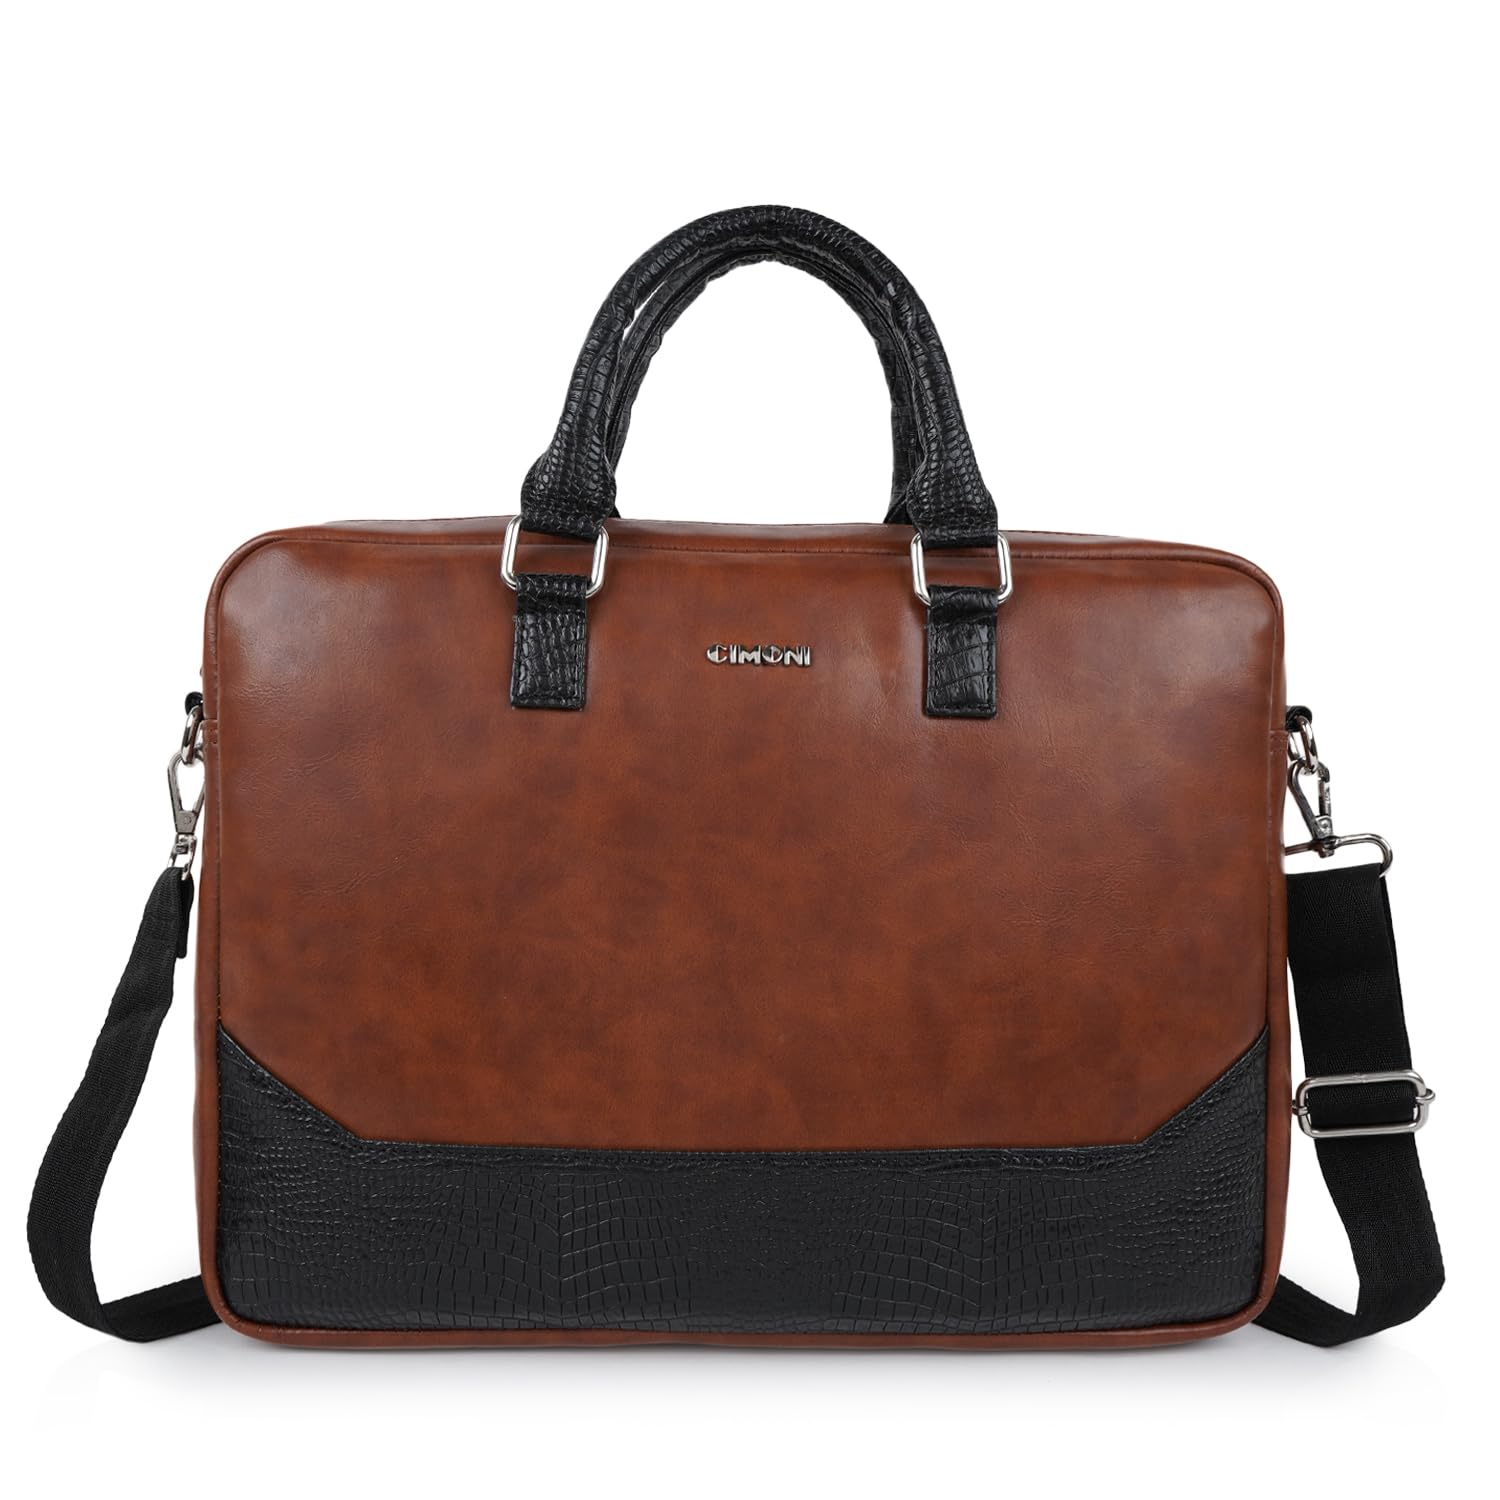 CIMONI Vegan Leather Bag Stylish Trendy Office Briefcase Laptop Bag College Crossbody Daytrip School Handheld Business Messenger Bag For Men (Color - Tan)